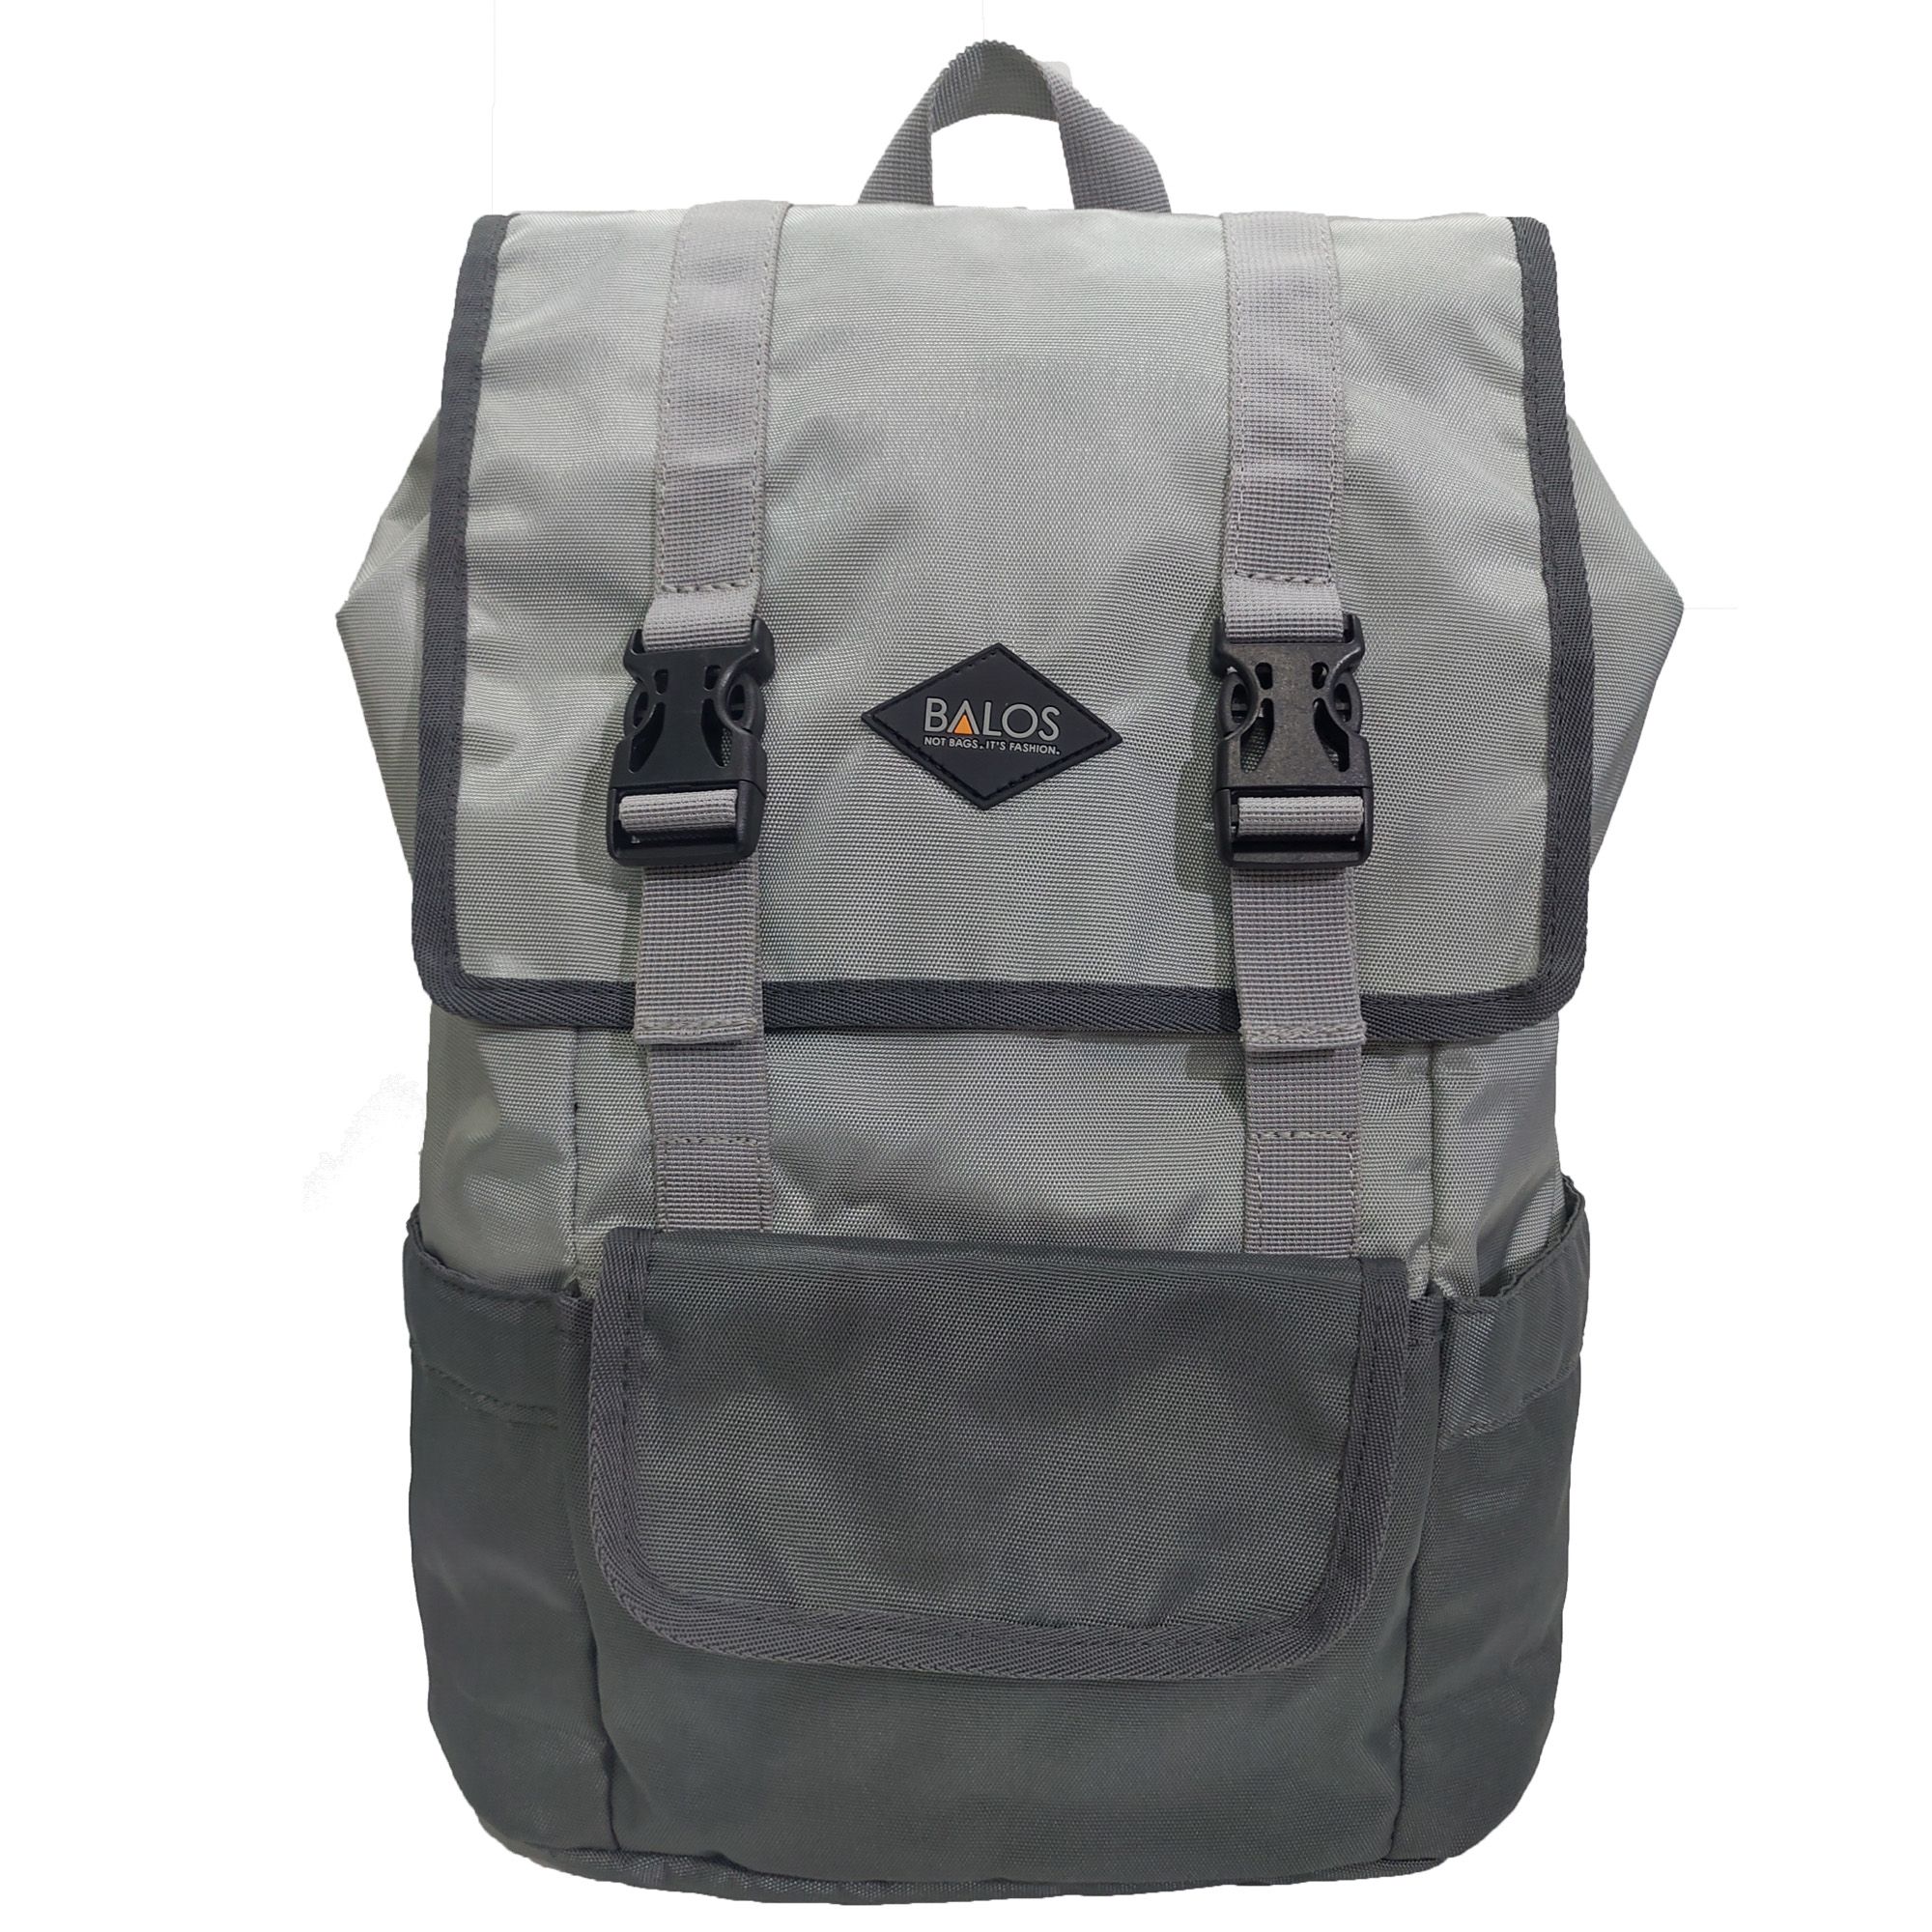  Balos SKY FLAP Grey/D.Grey Backpack - Balo Laptop thời trang 